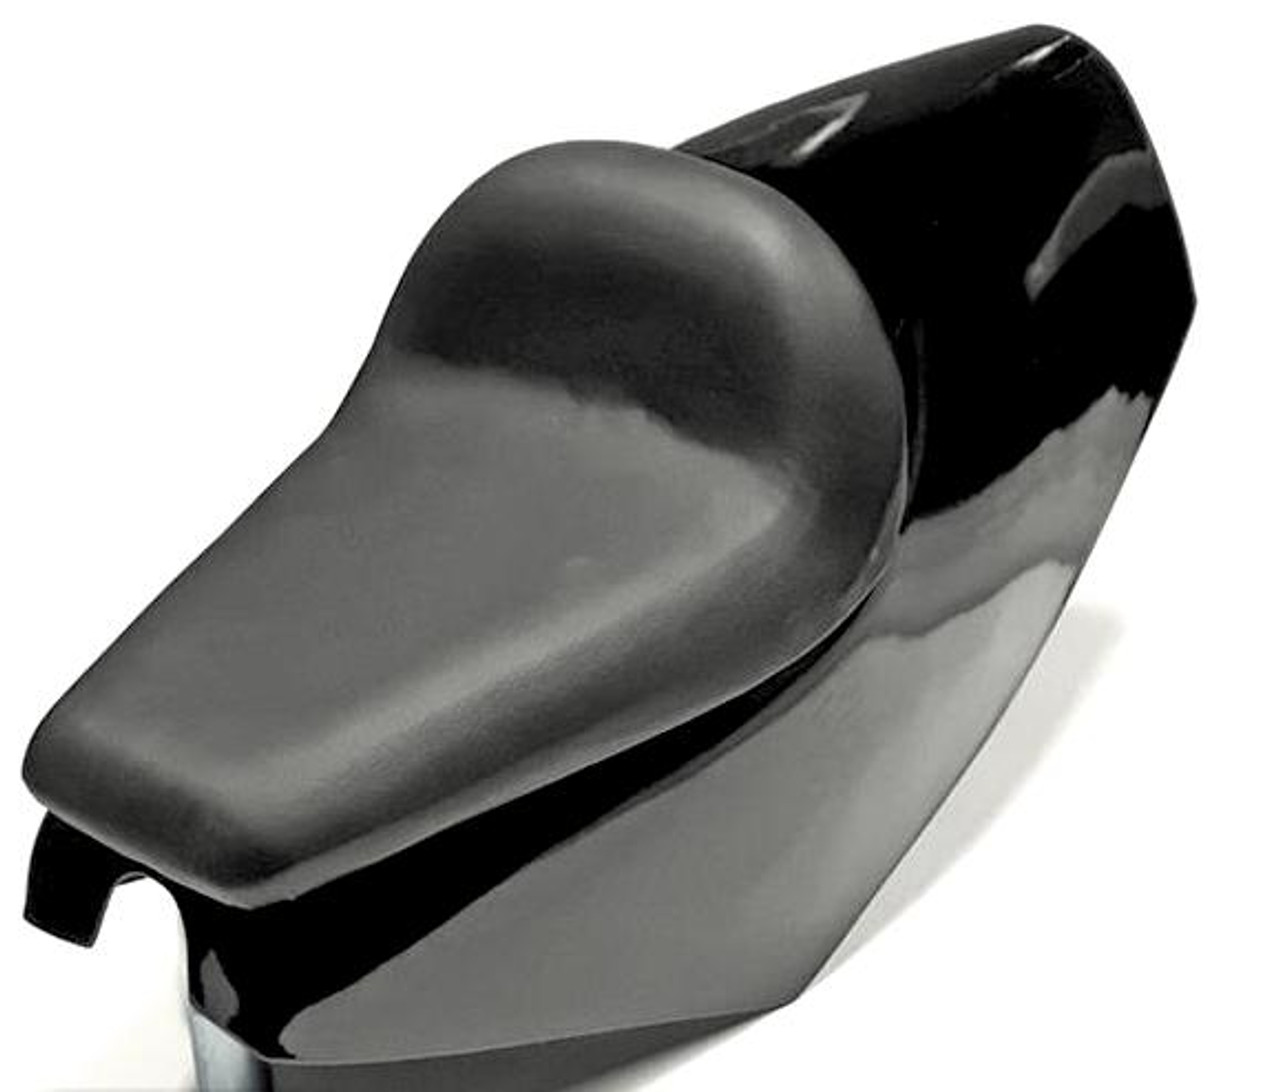 Moped GP Racing Seat with Fiberglass Fairing - Black